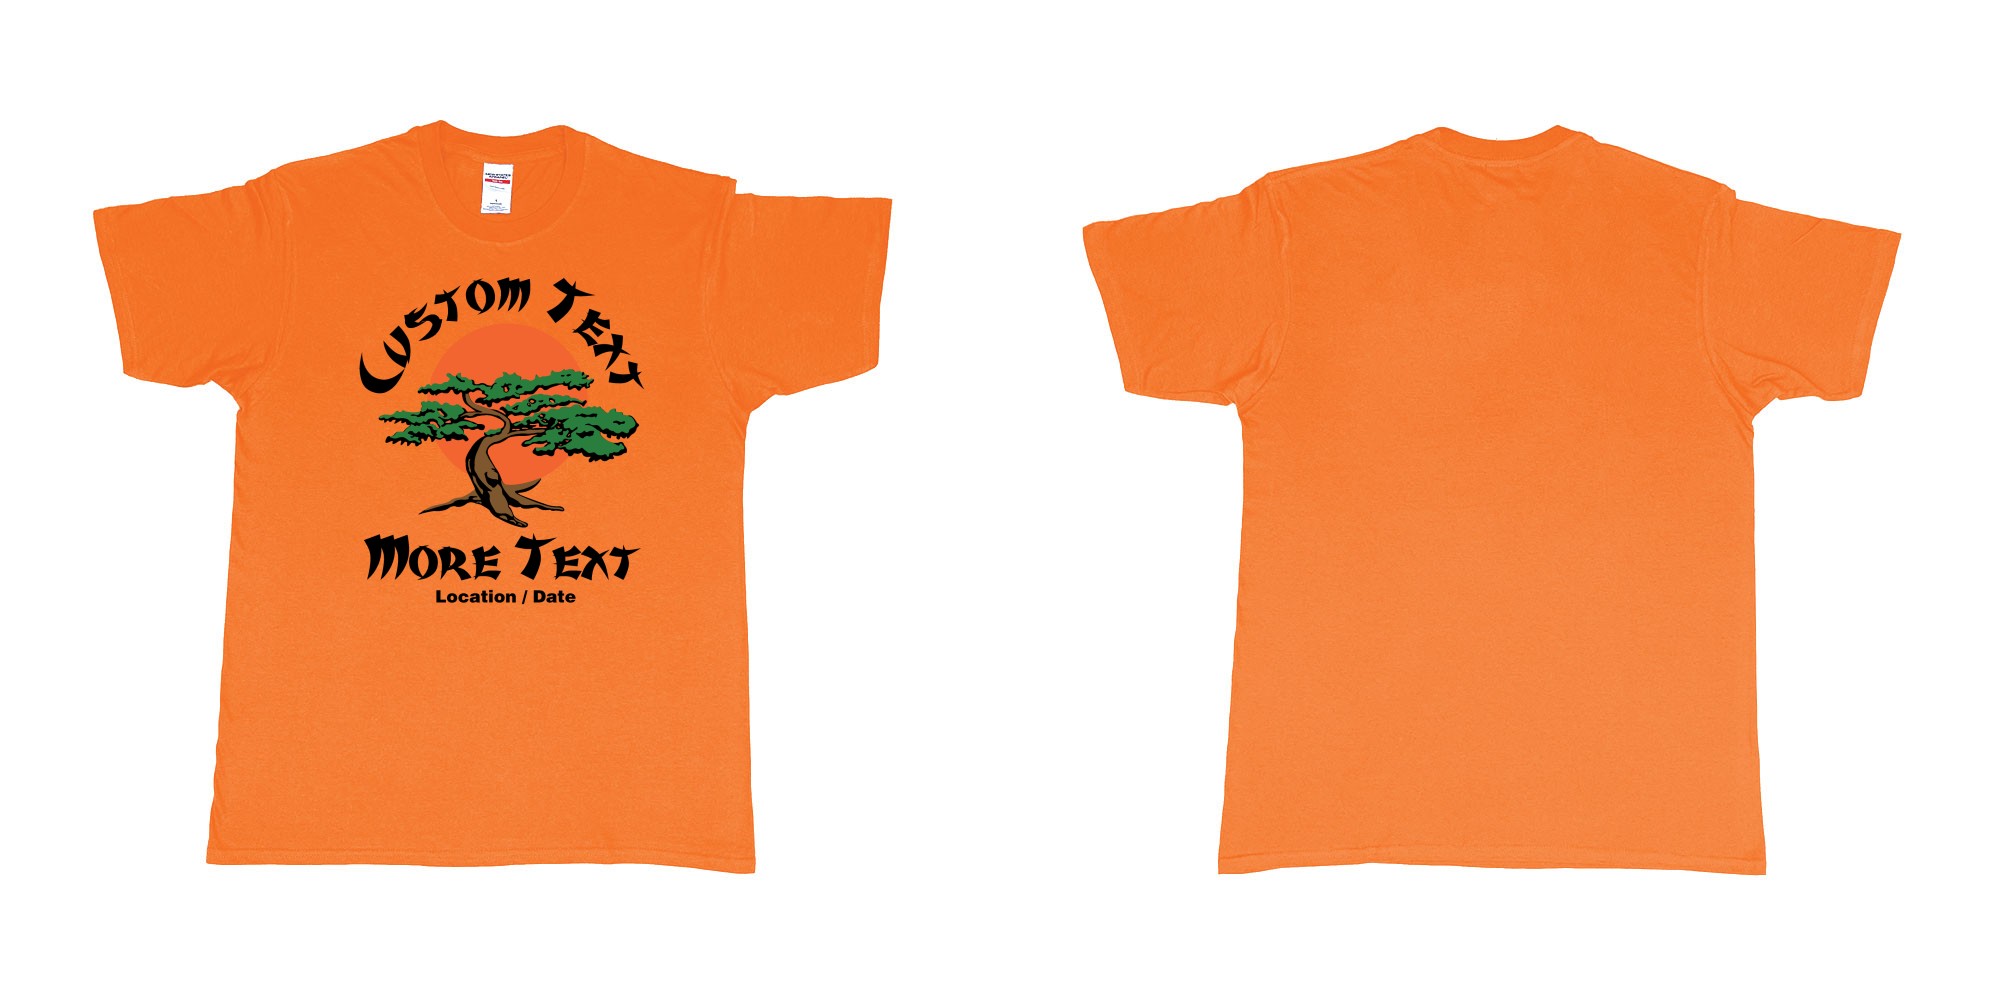 Custom tshirt design karate kid miyagi dojo karate logo custom text in fabric color orange choice your own text made in Bali by The Pirate Way